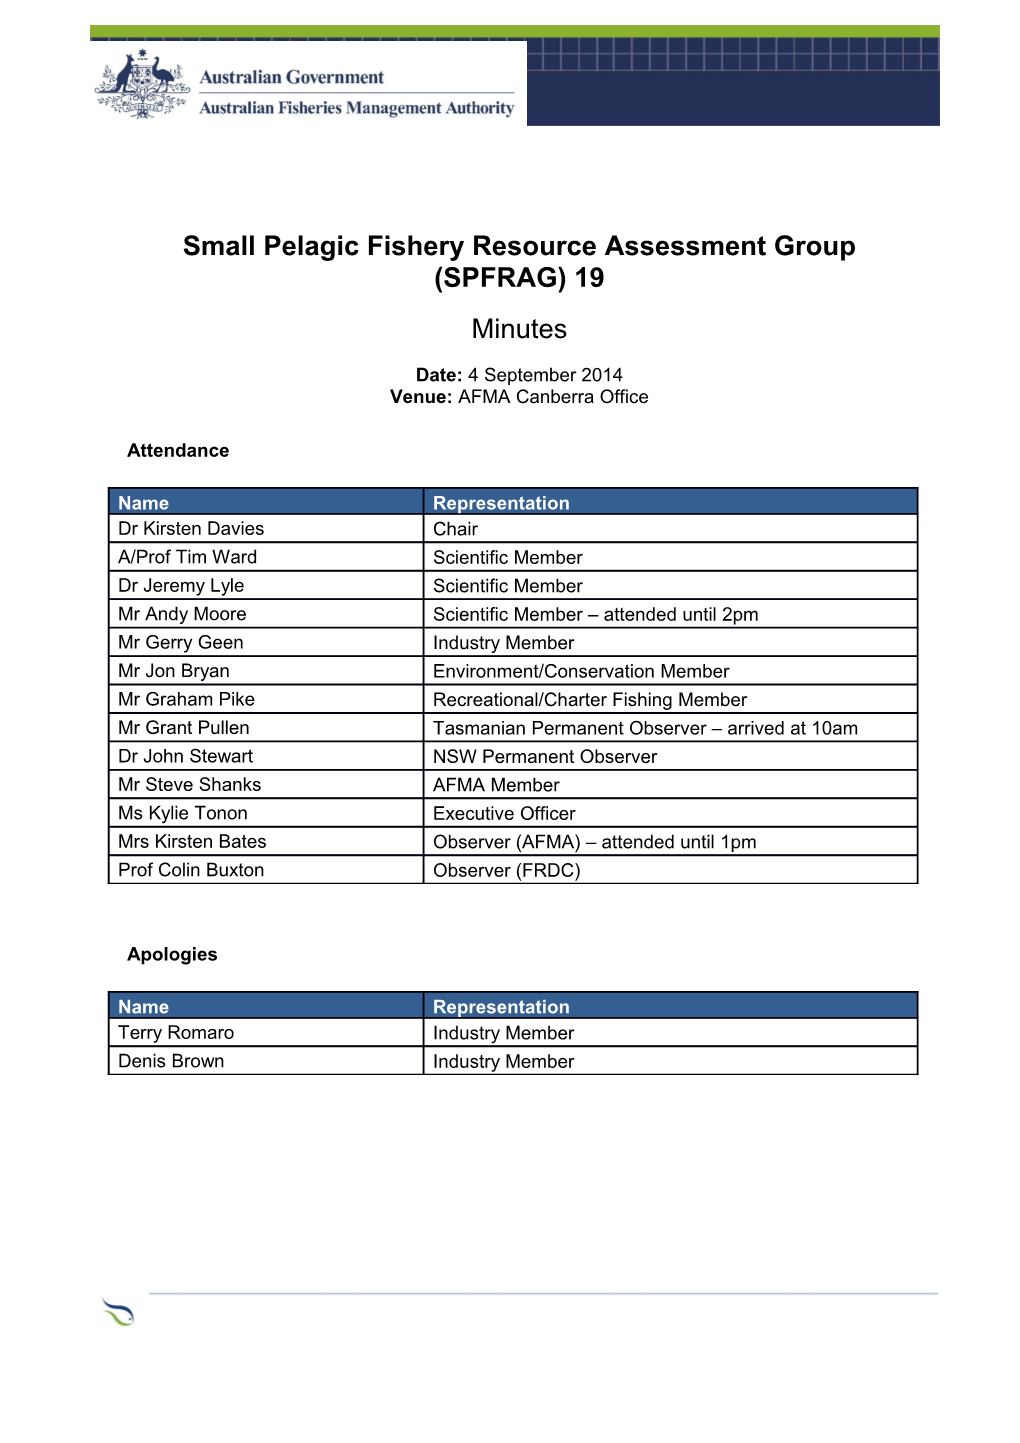 Small Pelagic Fishery Resource Assessment Group (SPFRAG) 19